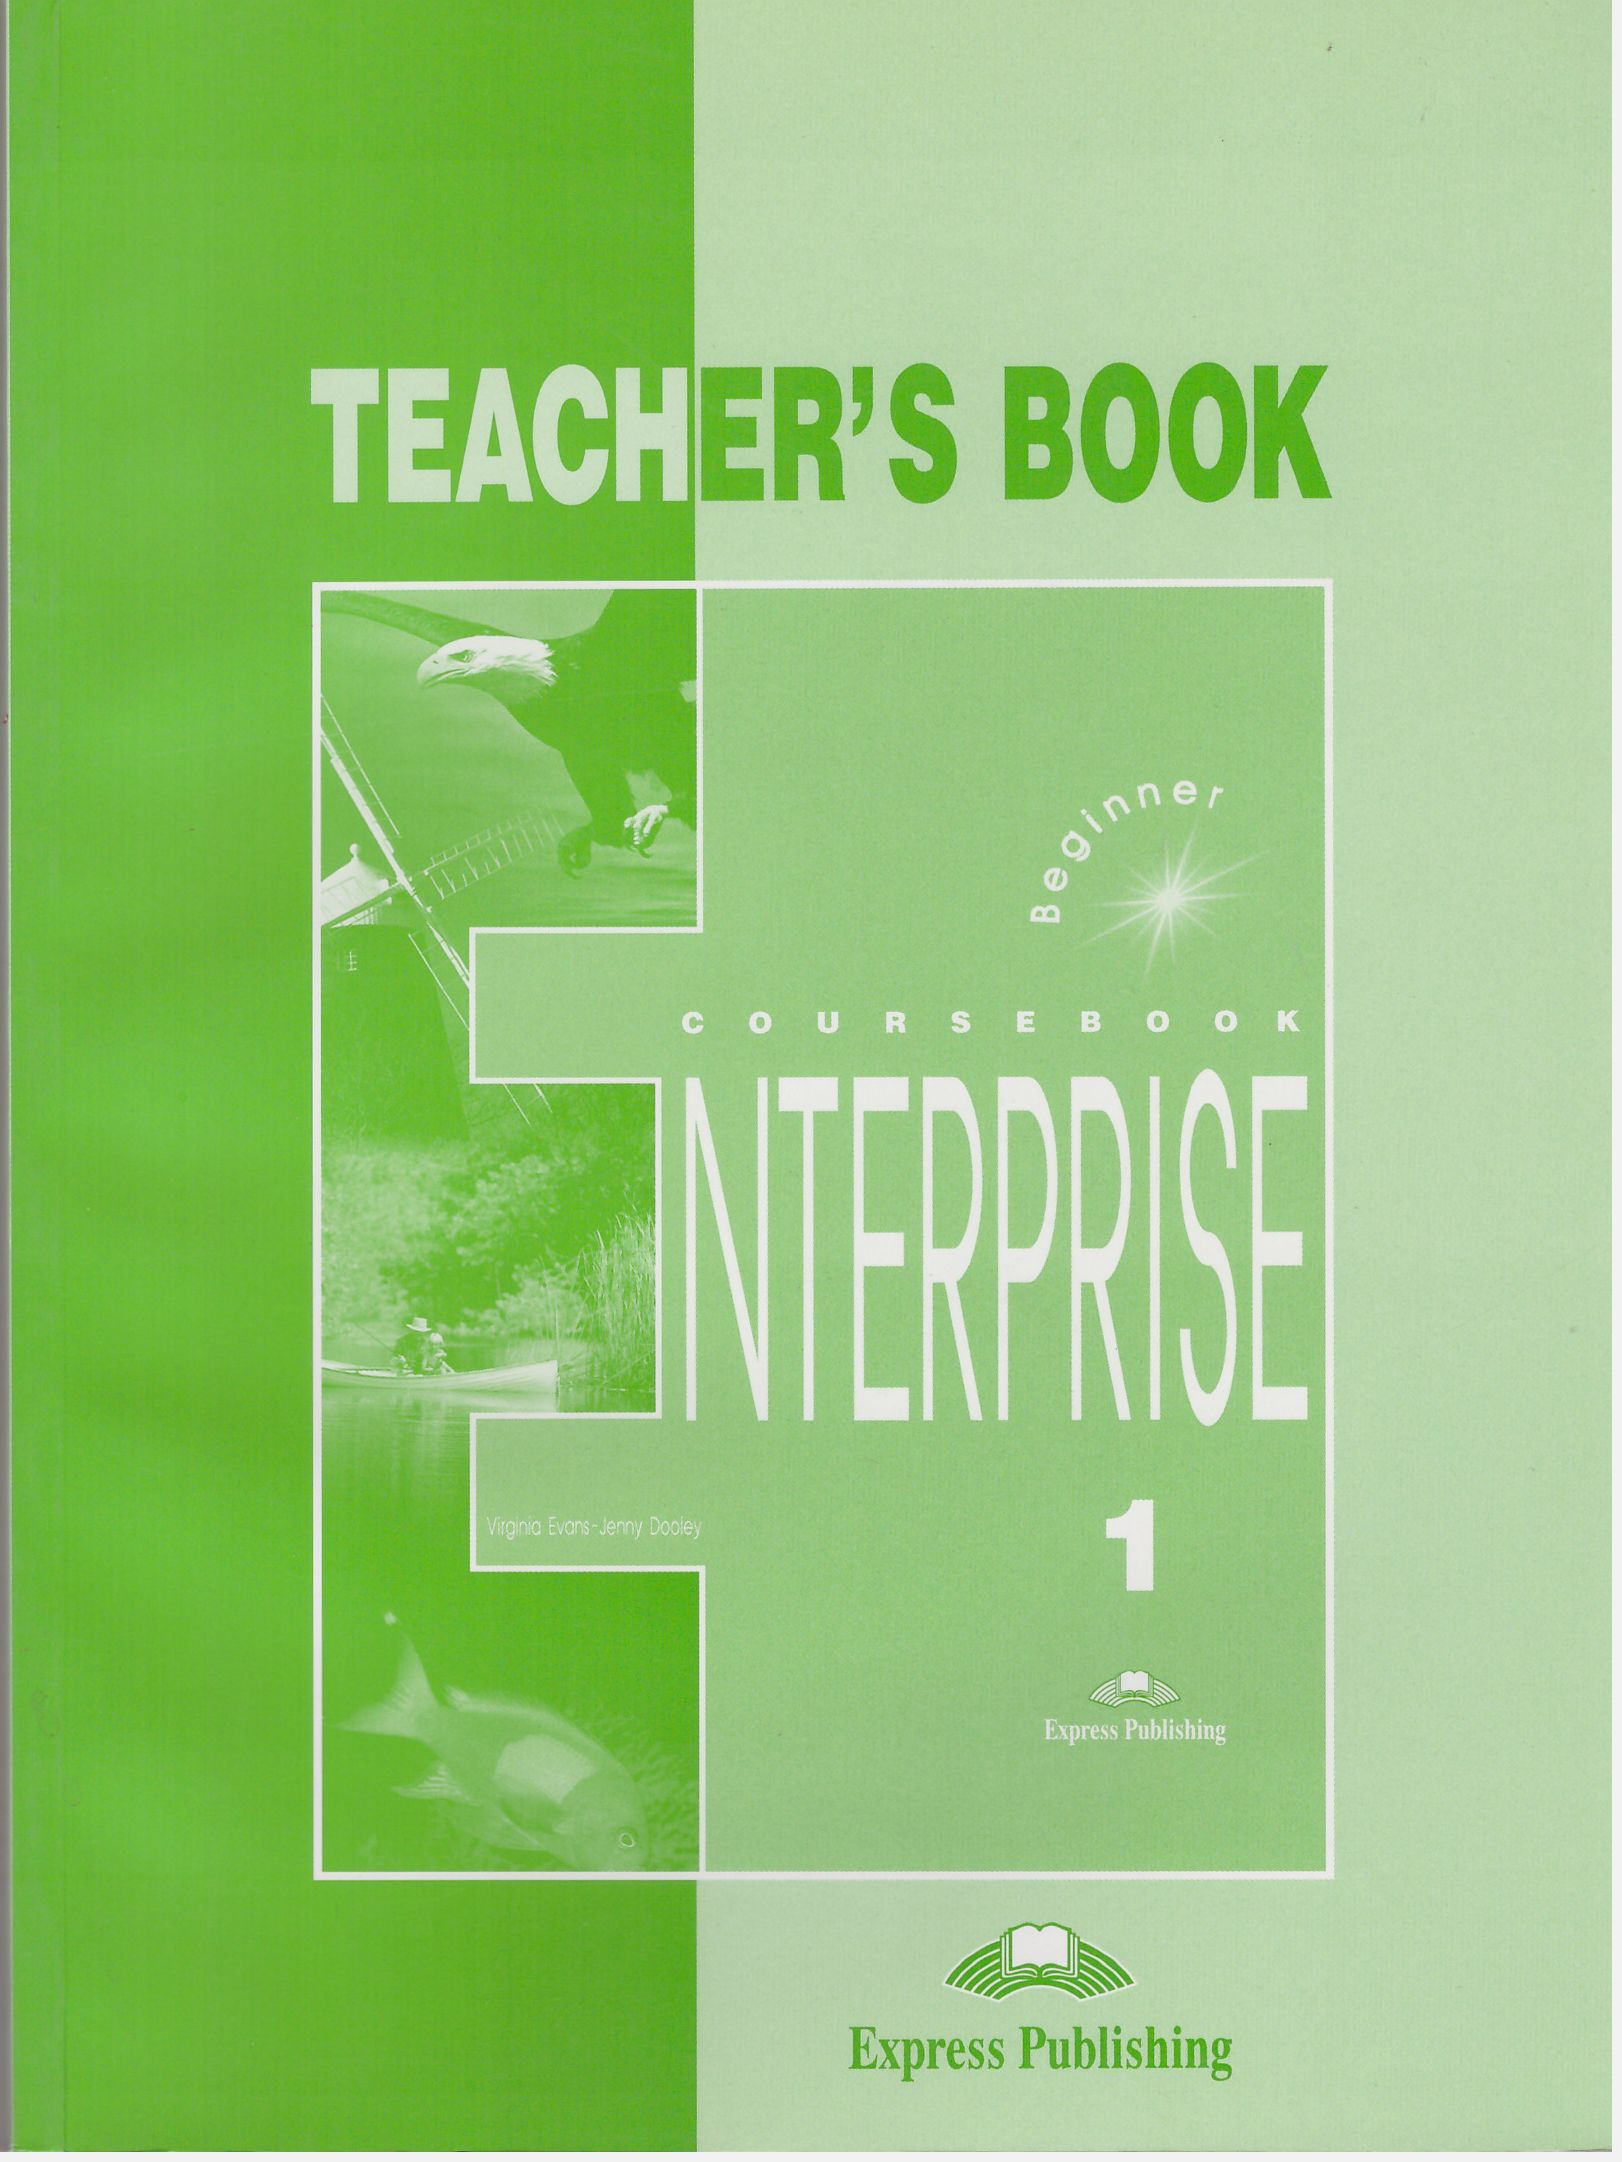 Enterprise teachers book